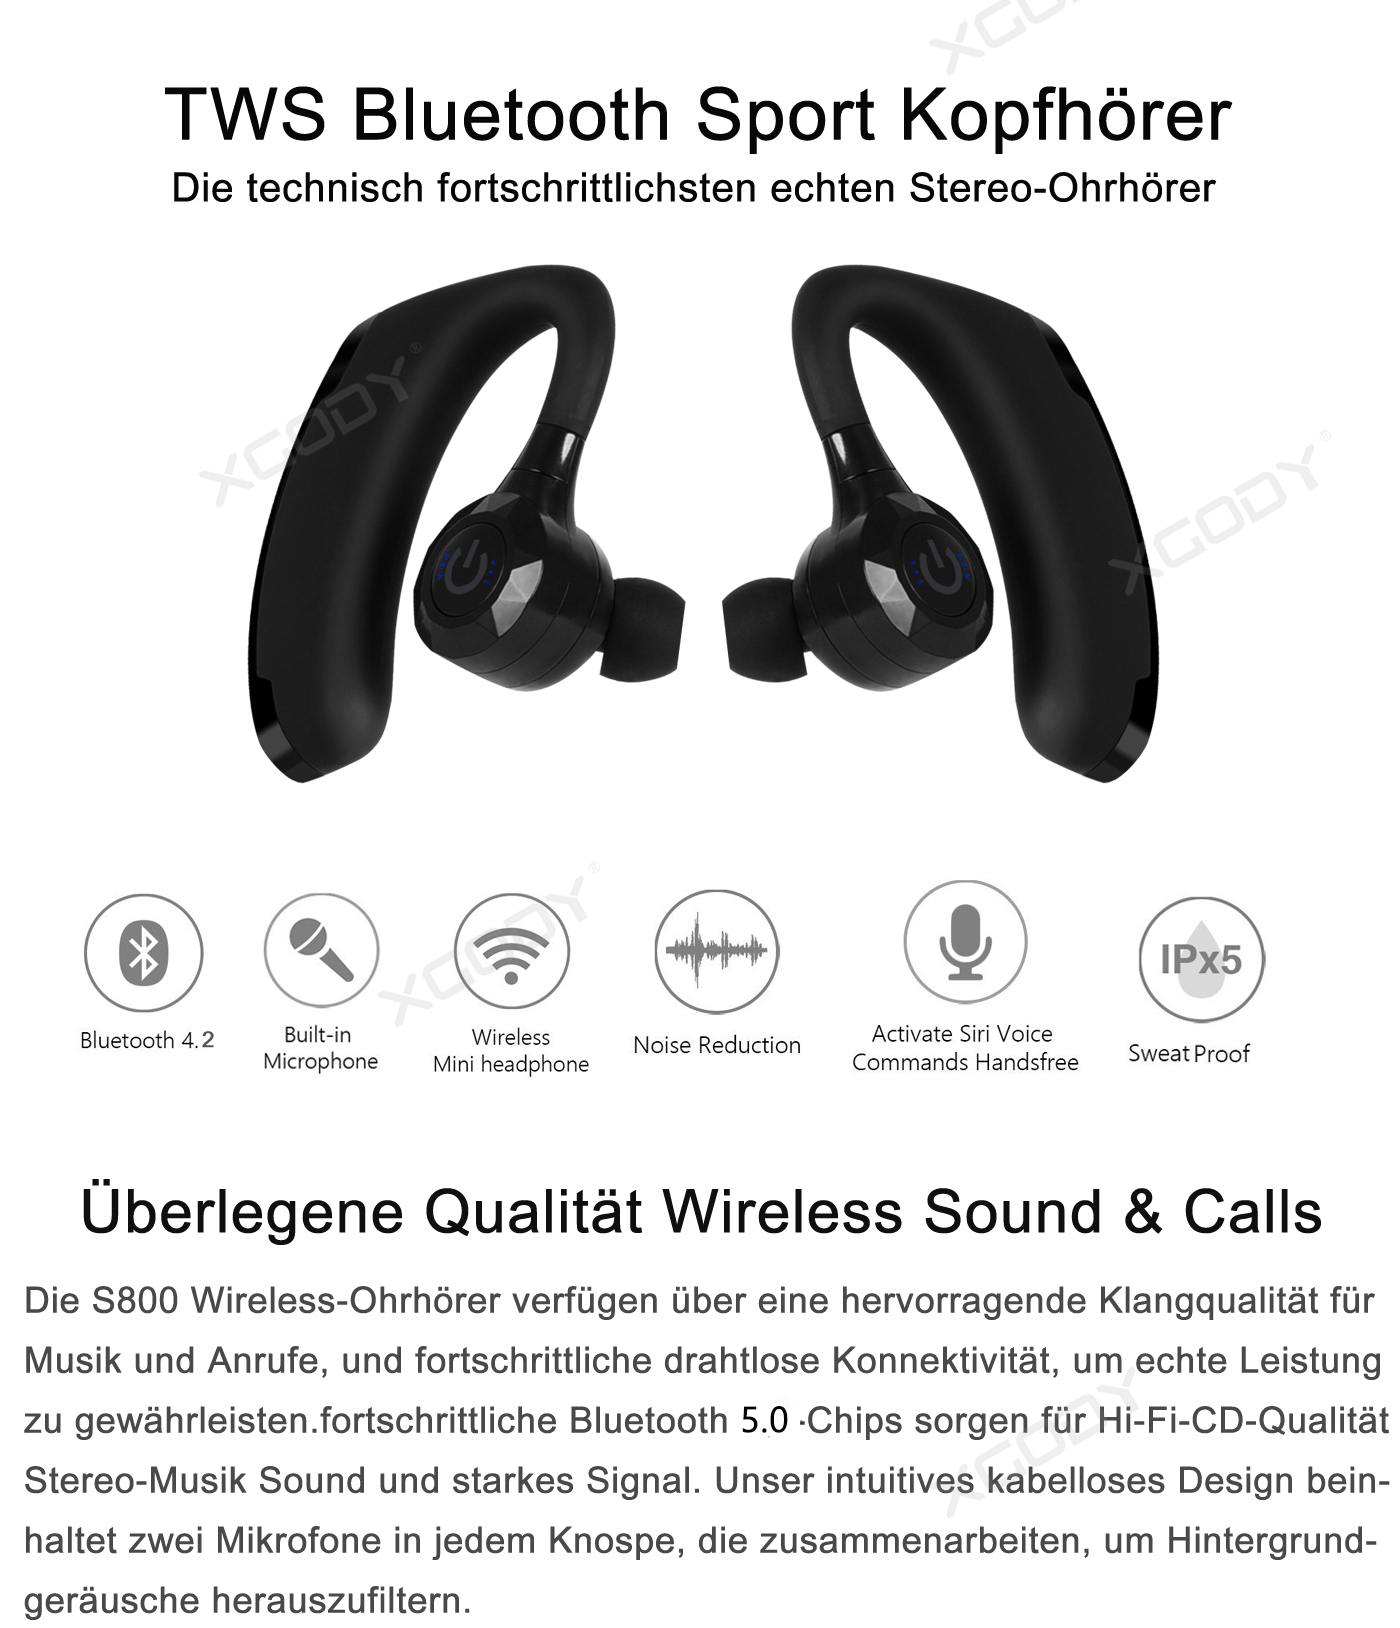 Mini drahtlose Bluetooth 4.0 Stereo In-Ear Kopfhörer Ohrhörer Einzel 5 Farben